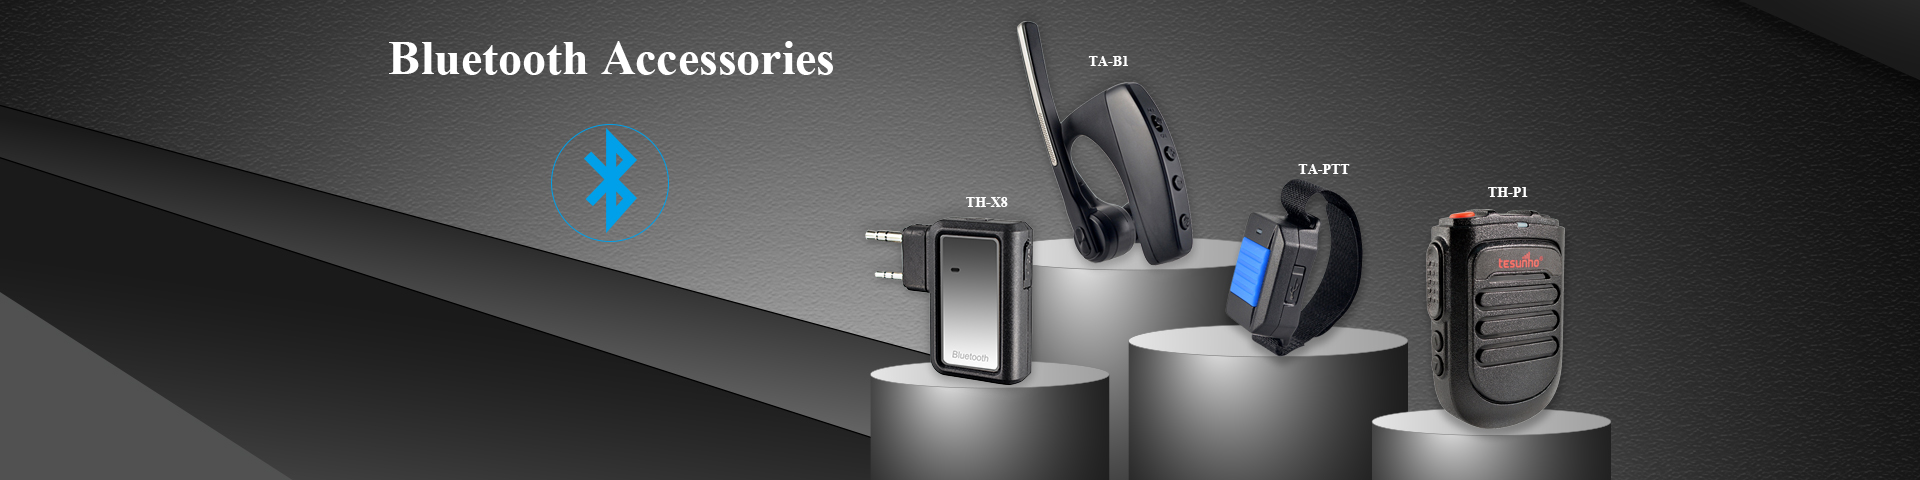 Bluetooth-Accessories-2.jpg